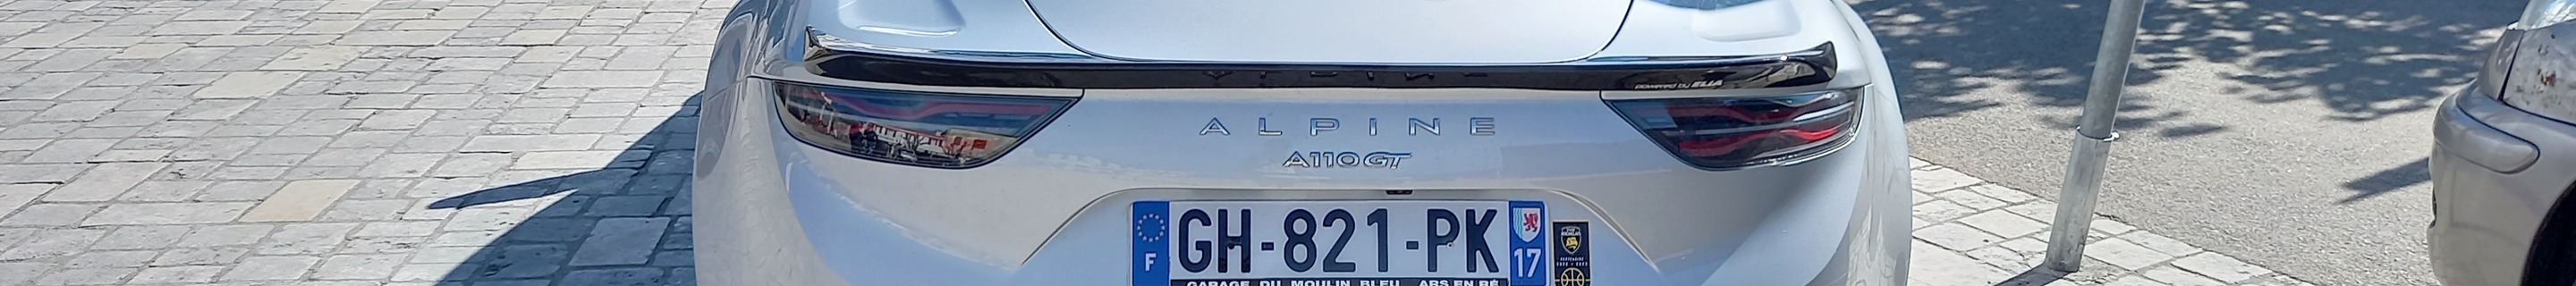 Alpine A110 GT 2022